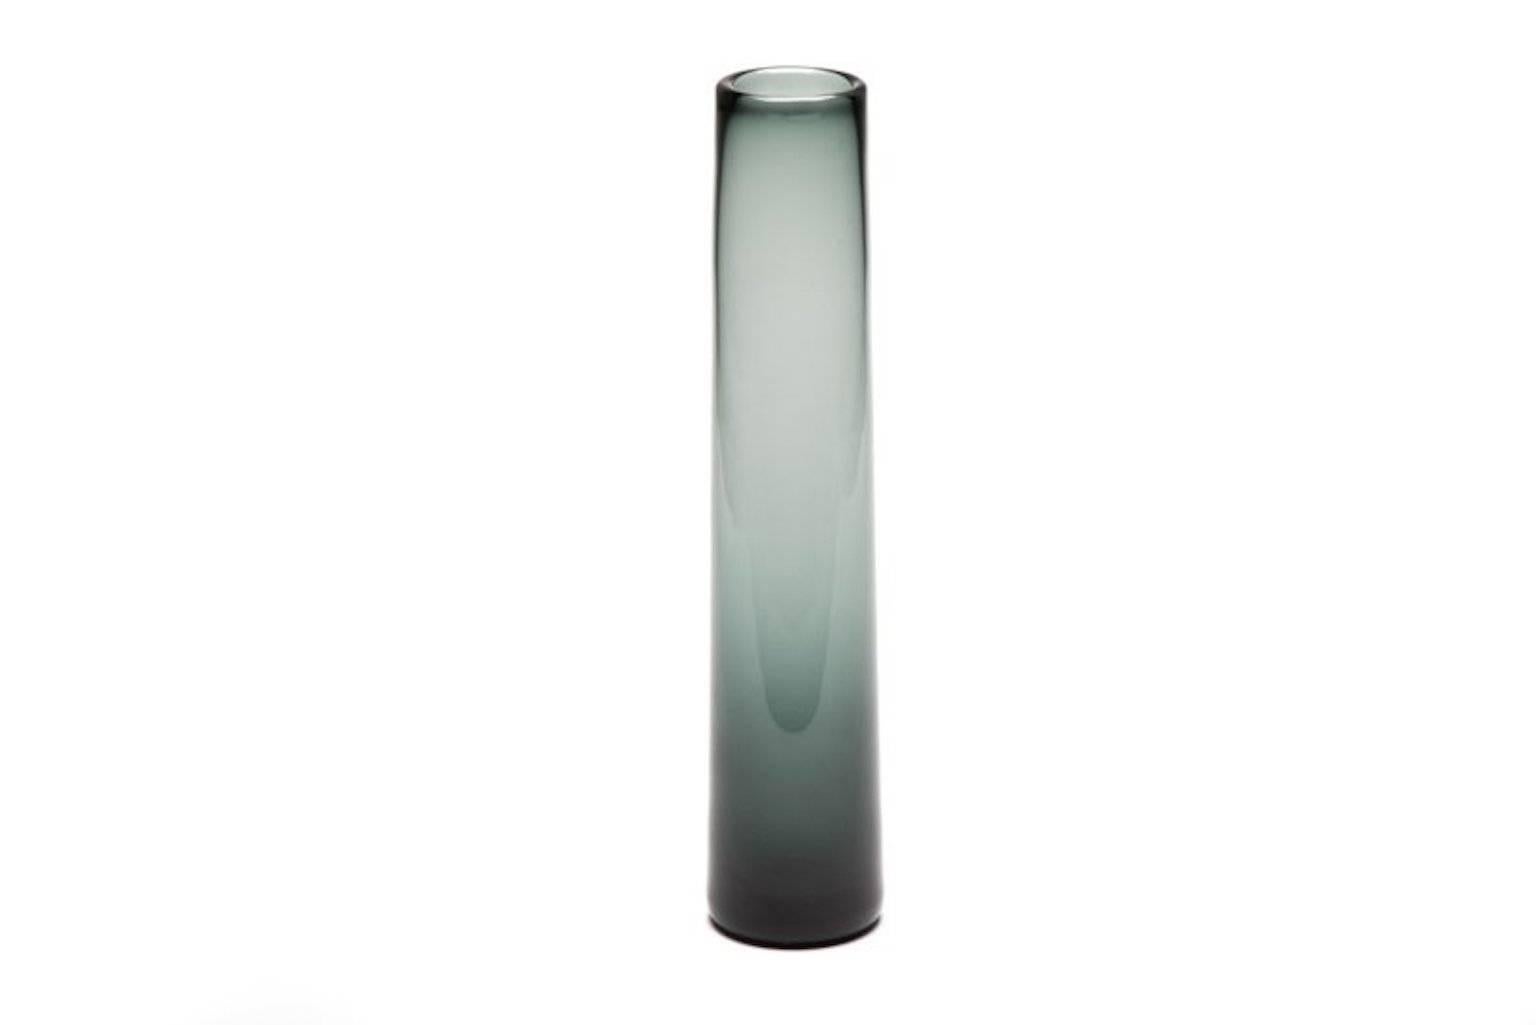 Vintage Danish Modern glass stem vase by Per Lutken.